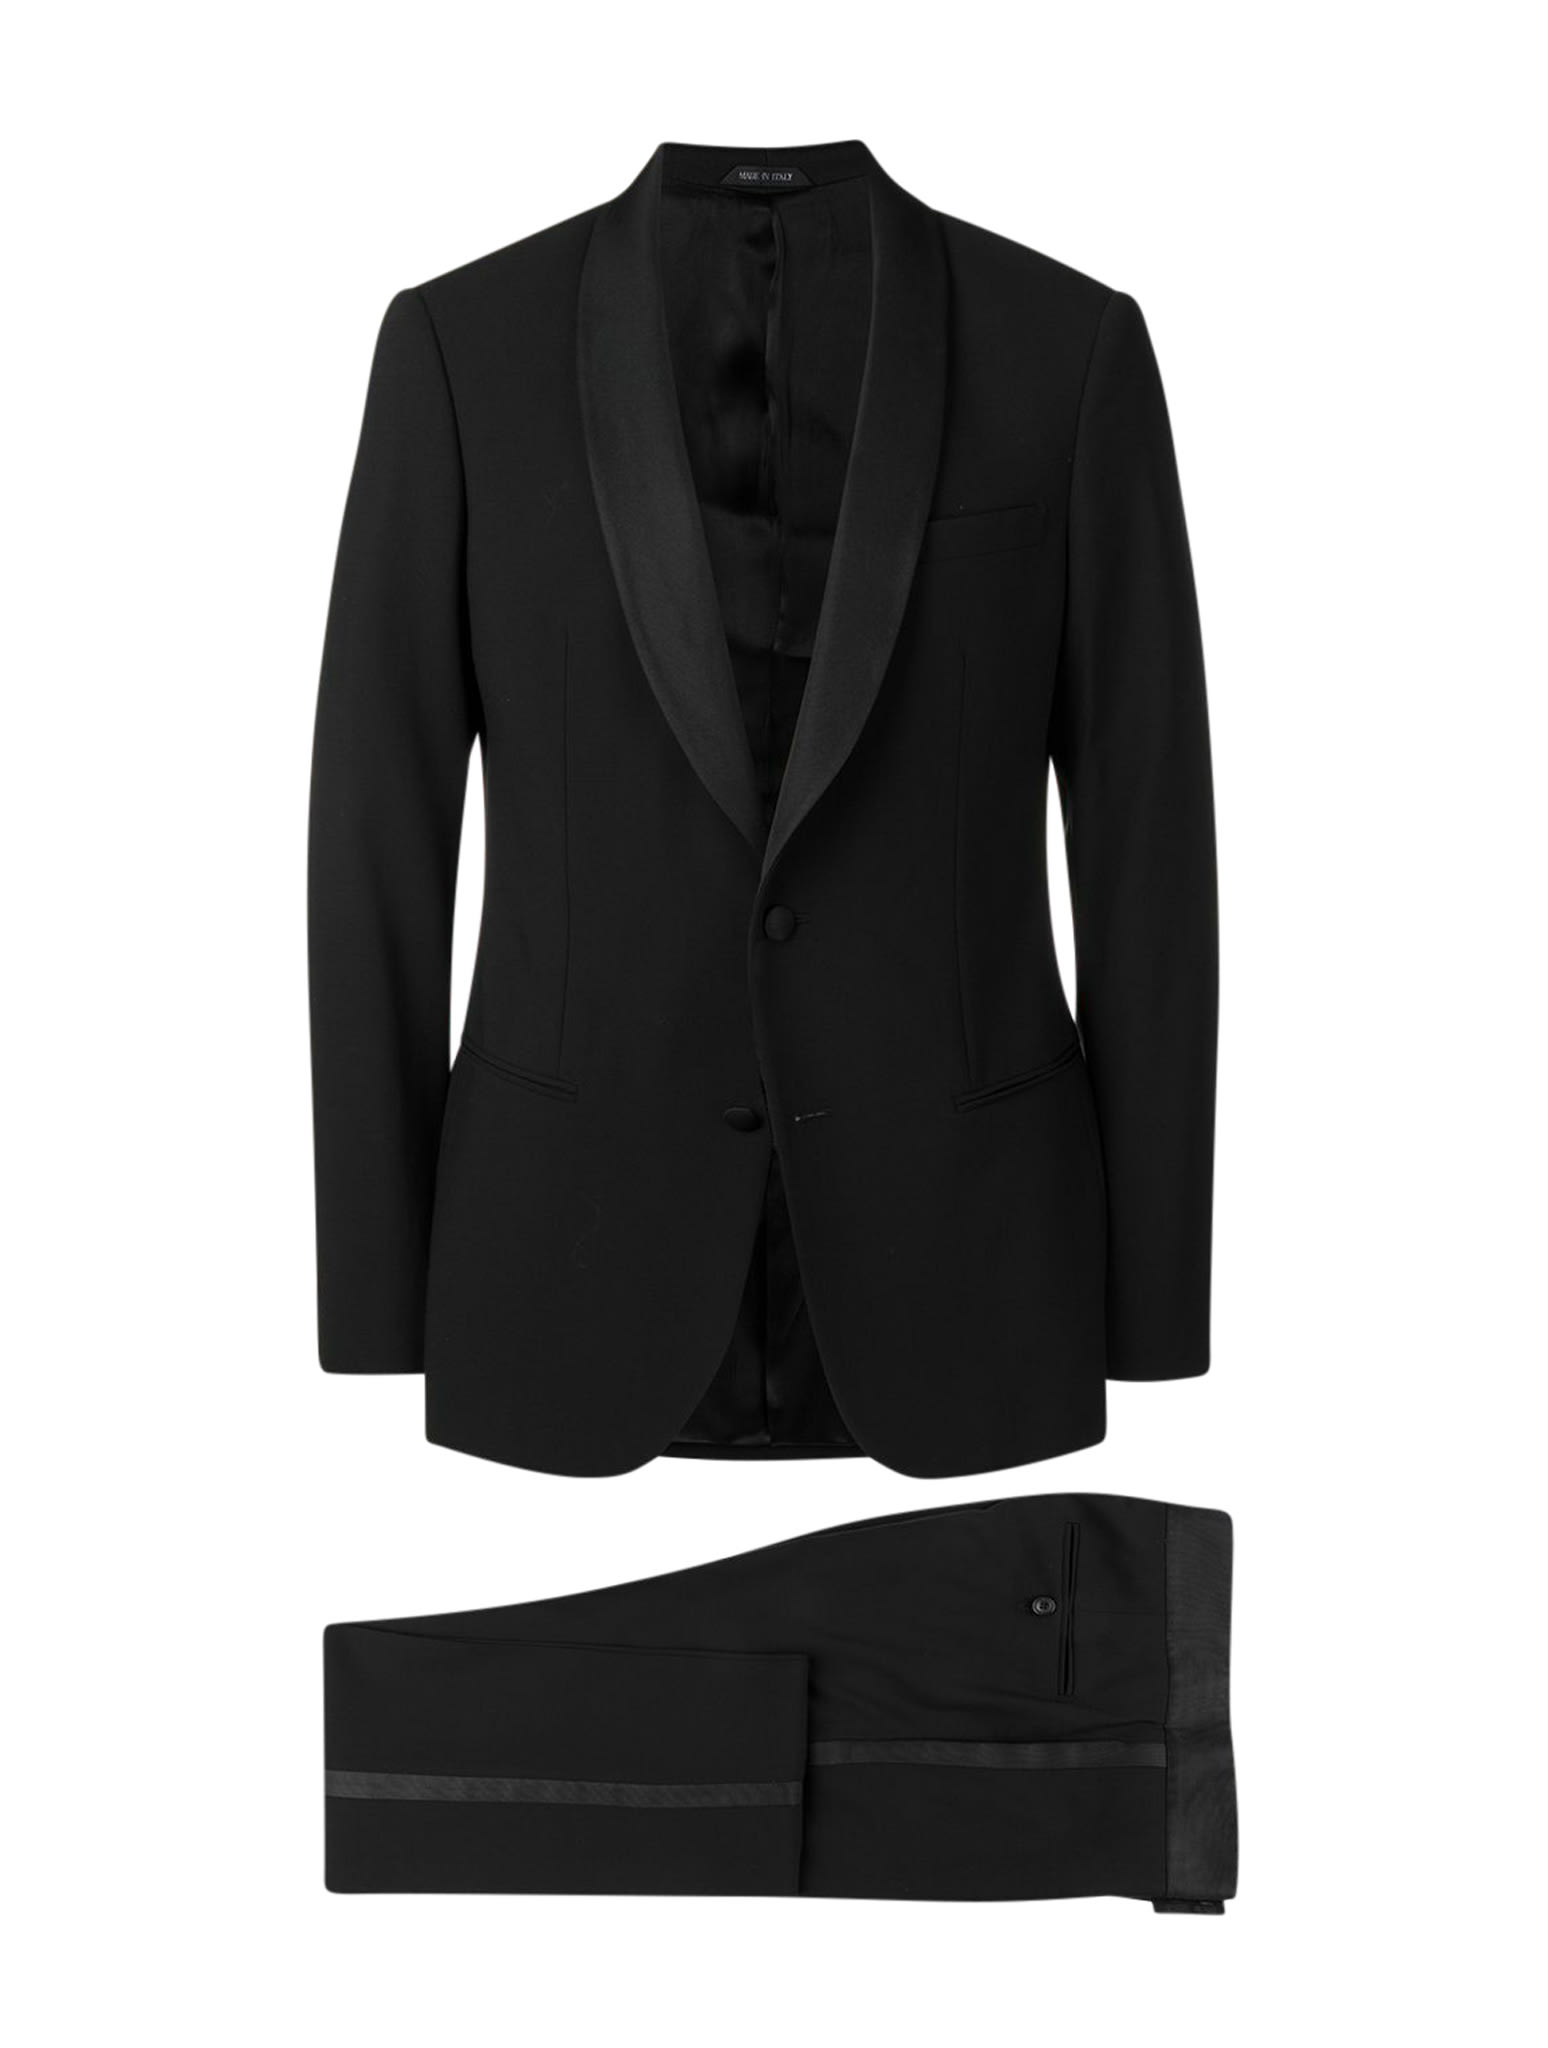 Giorgio Armani Tuxedo Suit